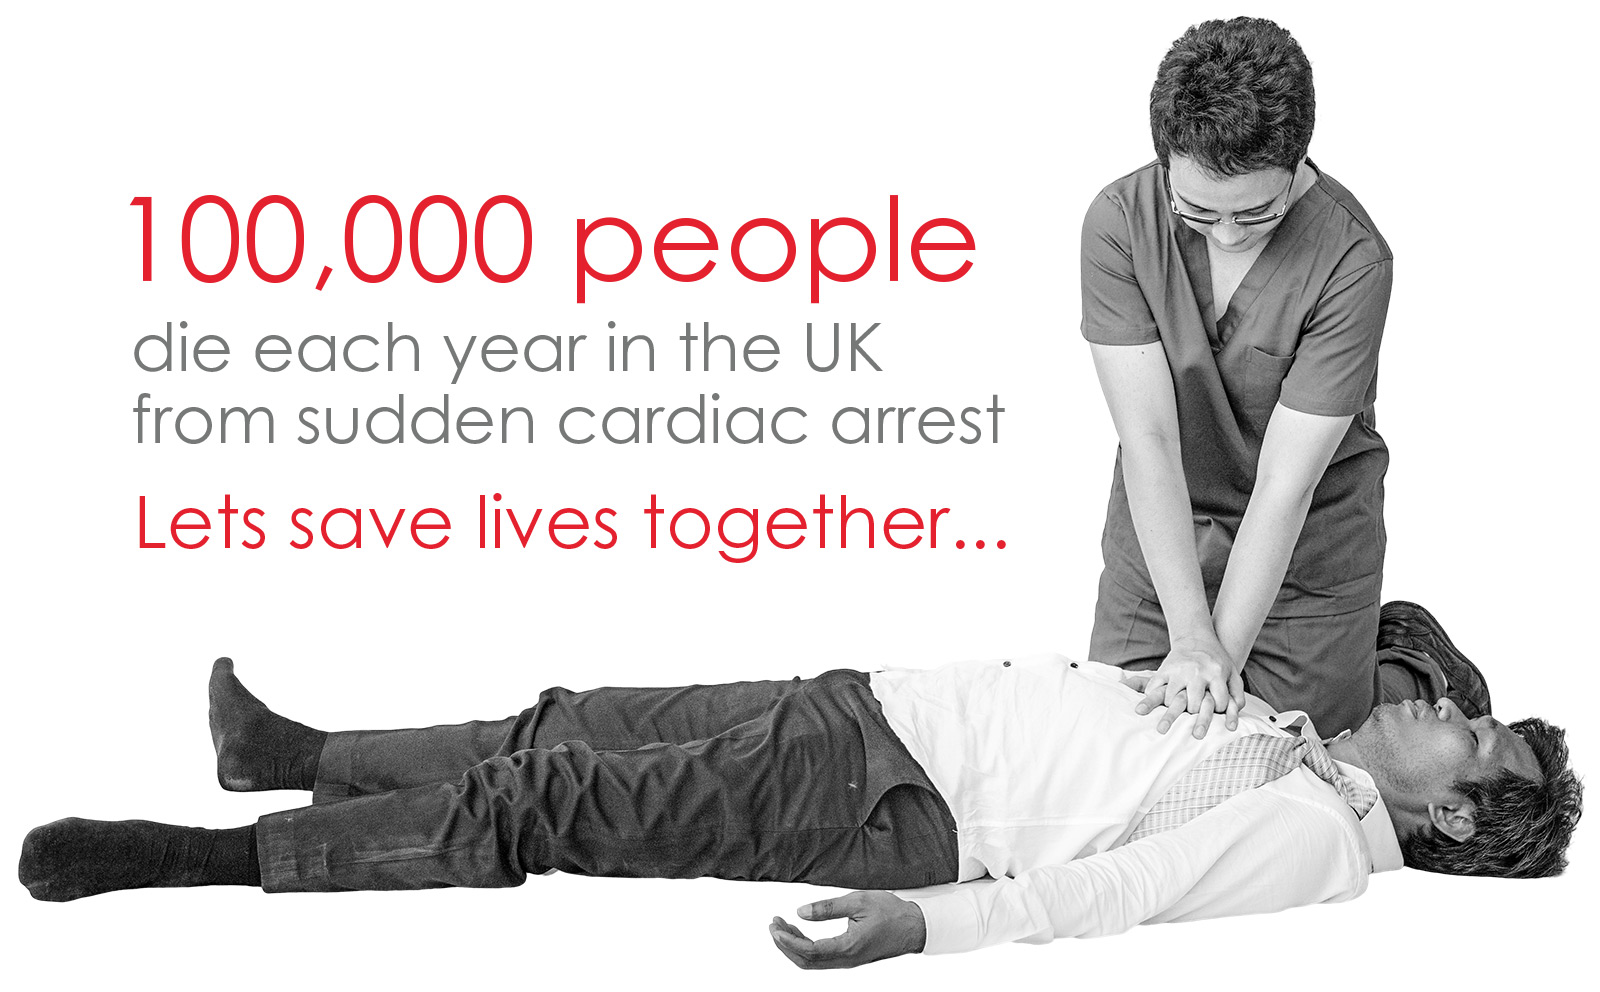 100,000 people die each year from cardiac arrest